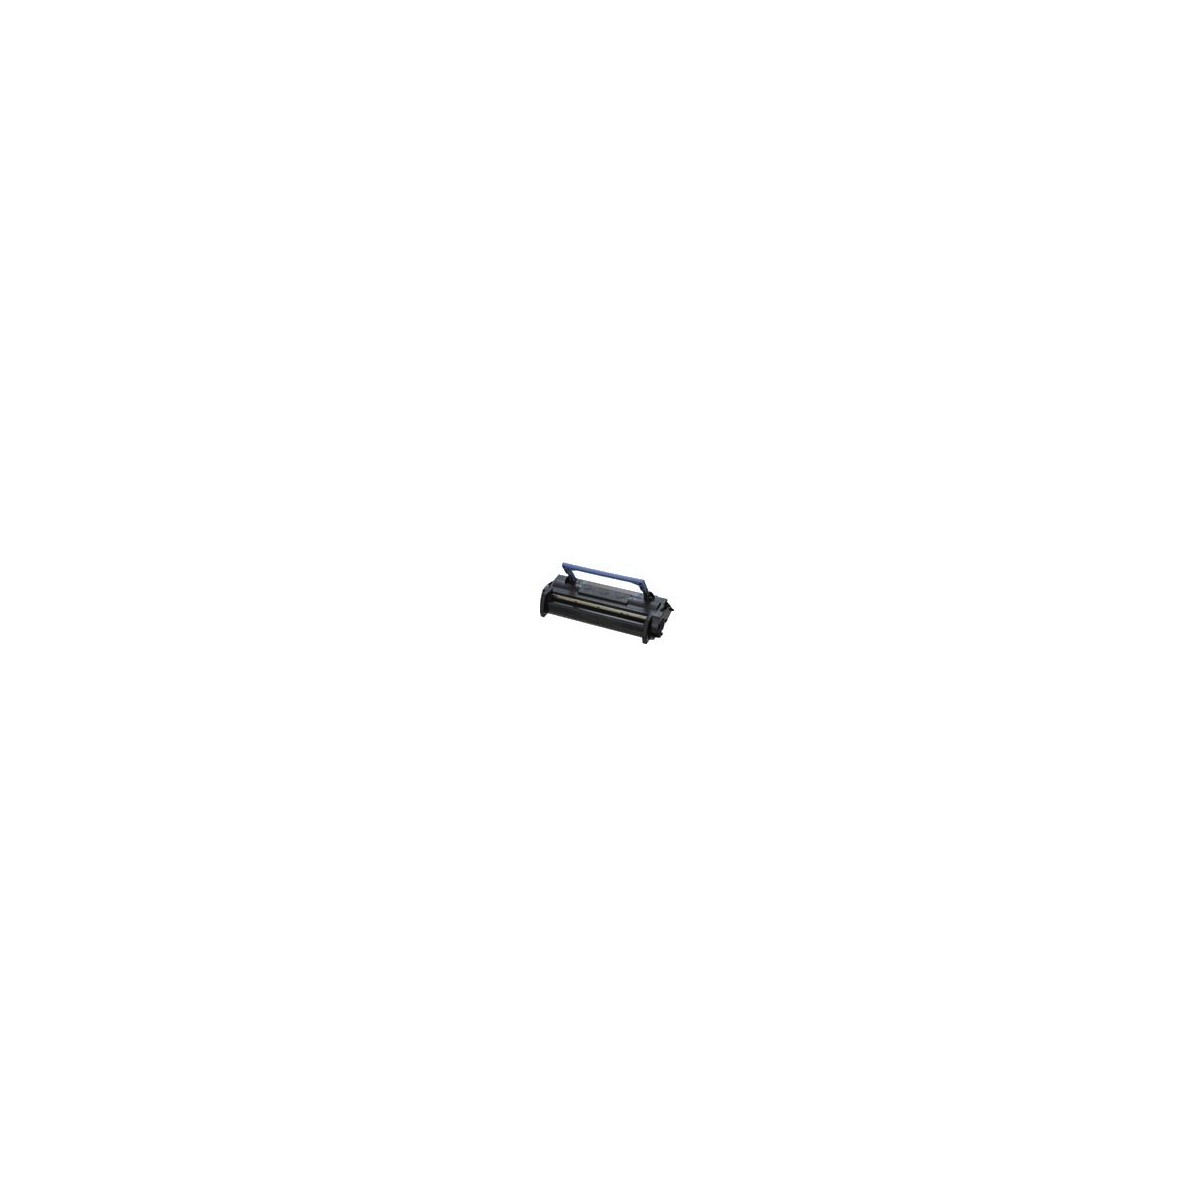 Epson EPL-5900 -6100 Developer Cartridge Black 6k - 6000 pages - 1 pc(s)